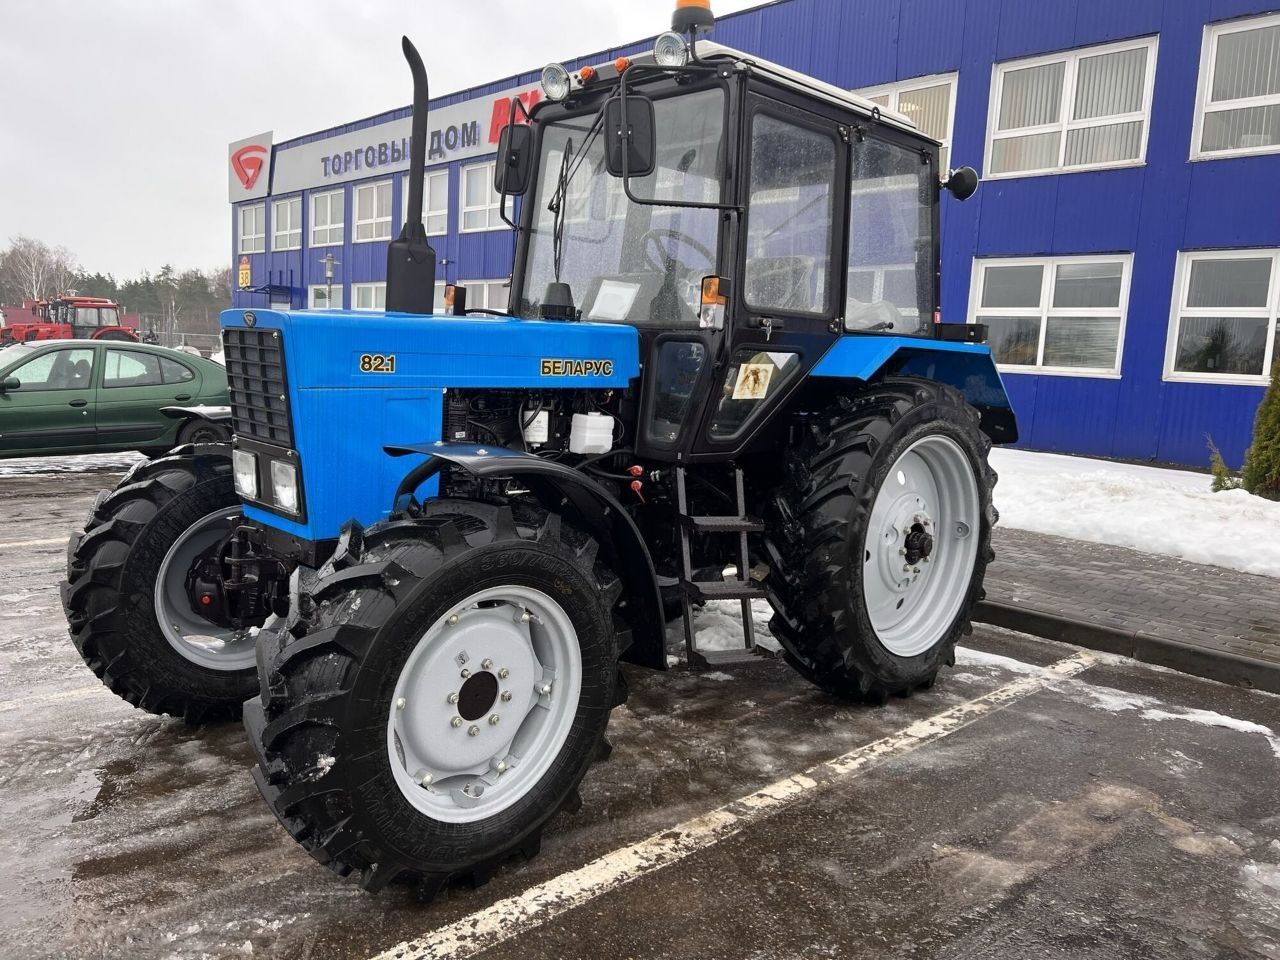 Traktor belarus 82.1 aksiyaga shoshiling